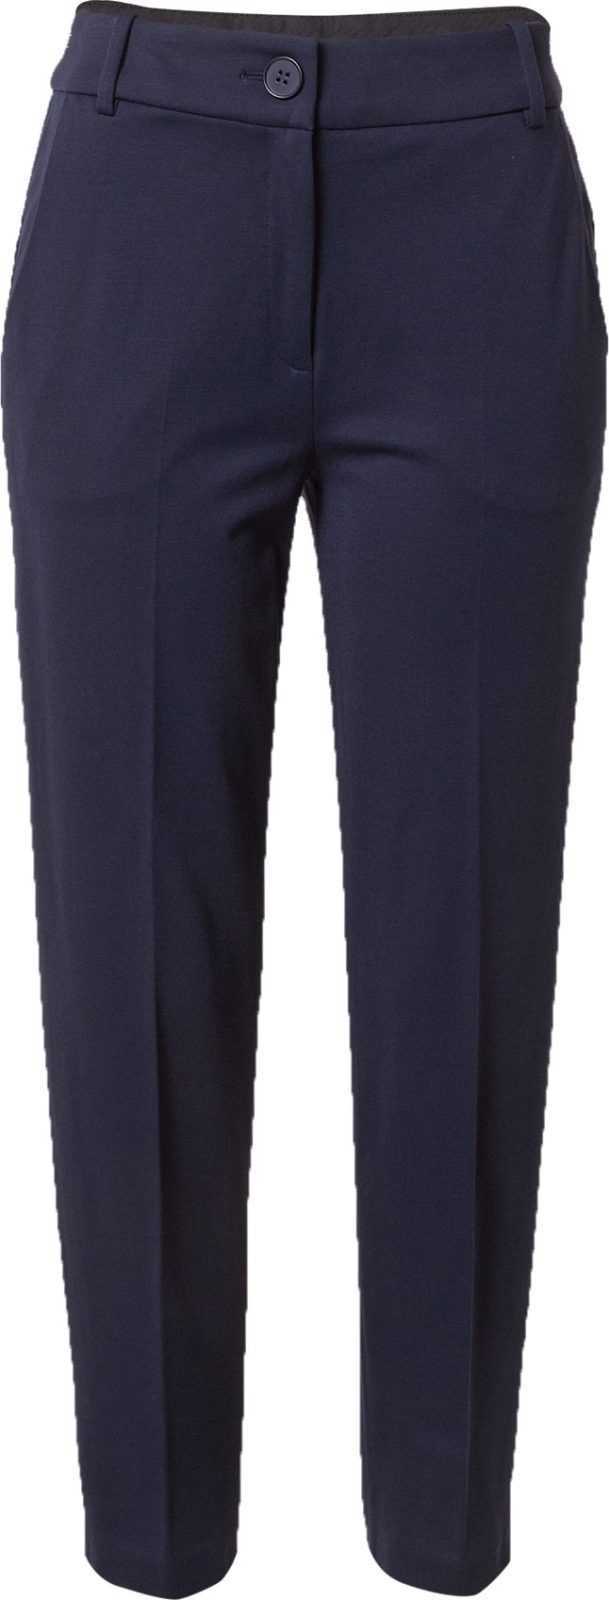 ESPRIT Kalhoty s puky marine modrá